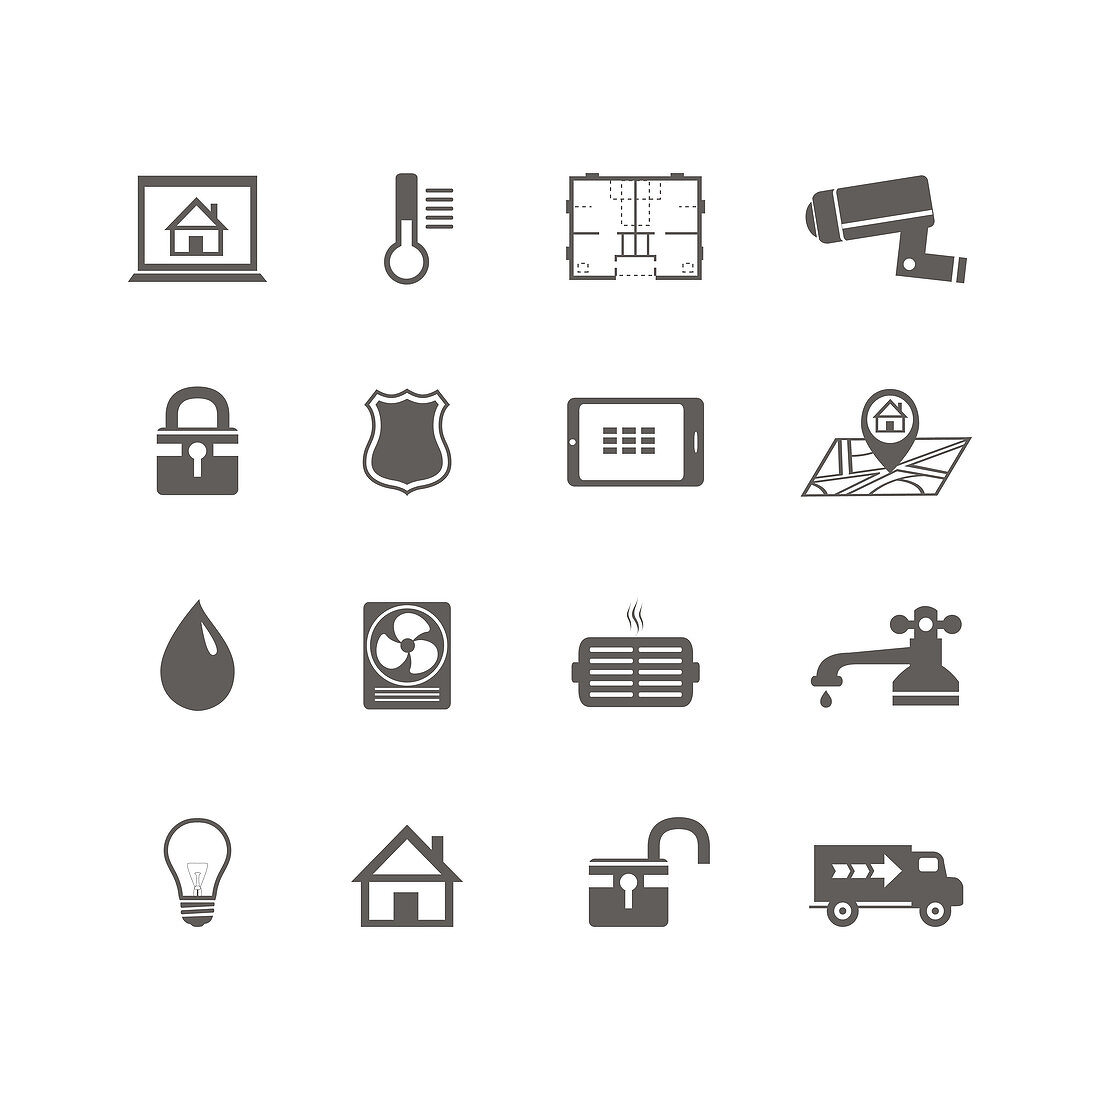 Smart home icons, illustration